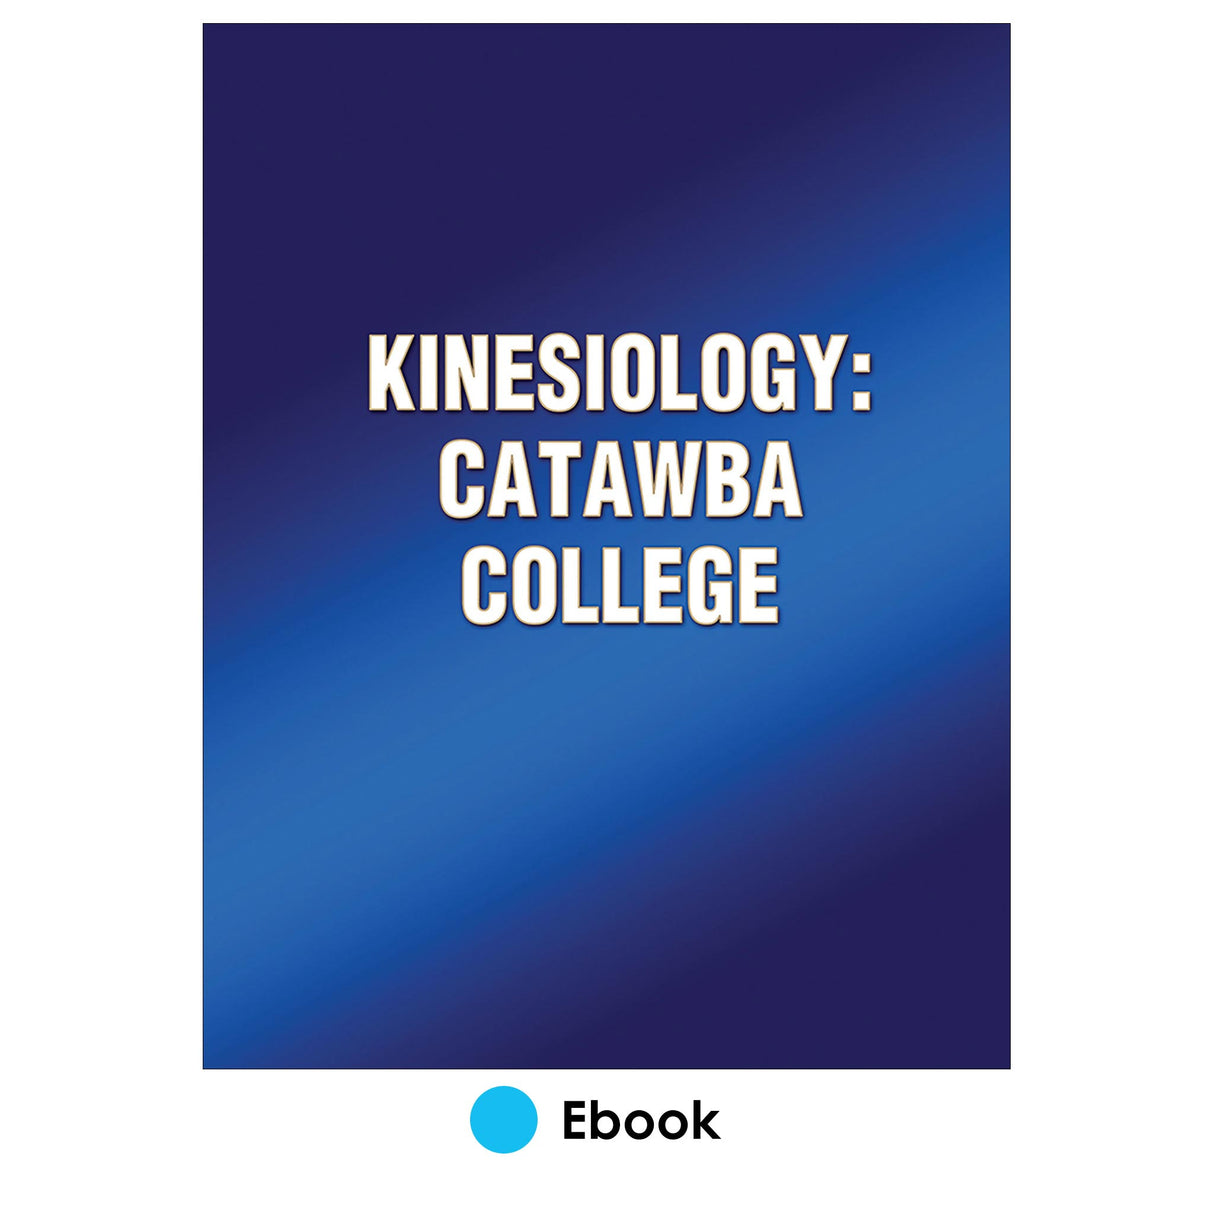 Kinesiology: Catawba College